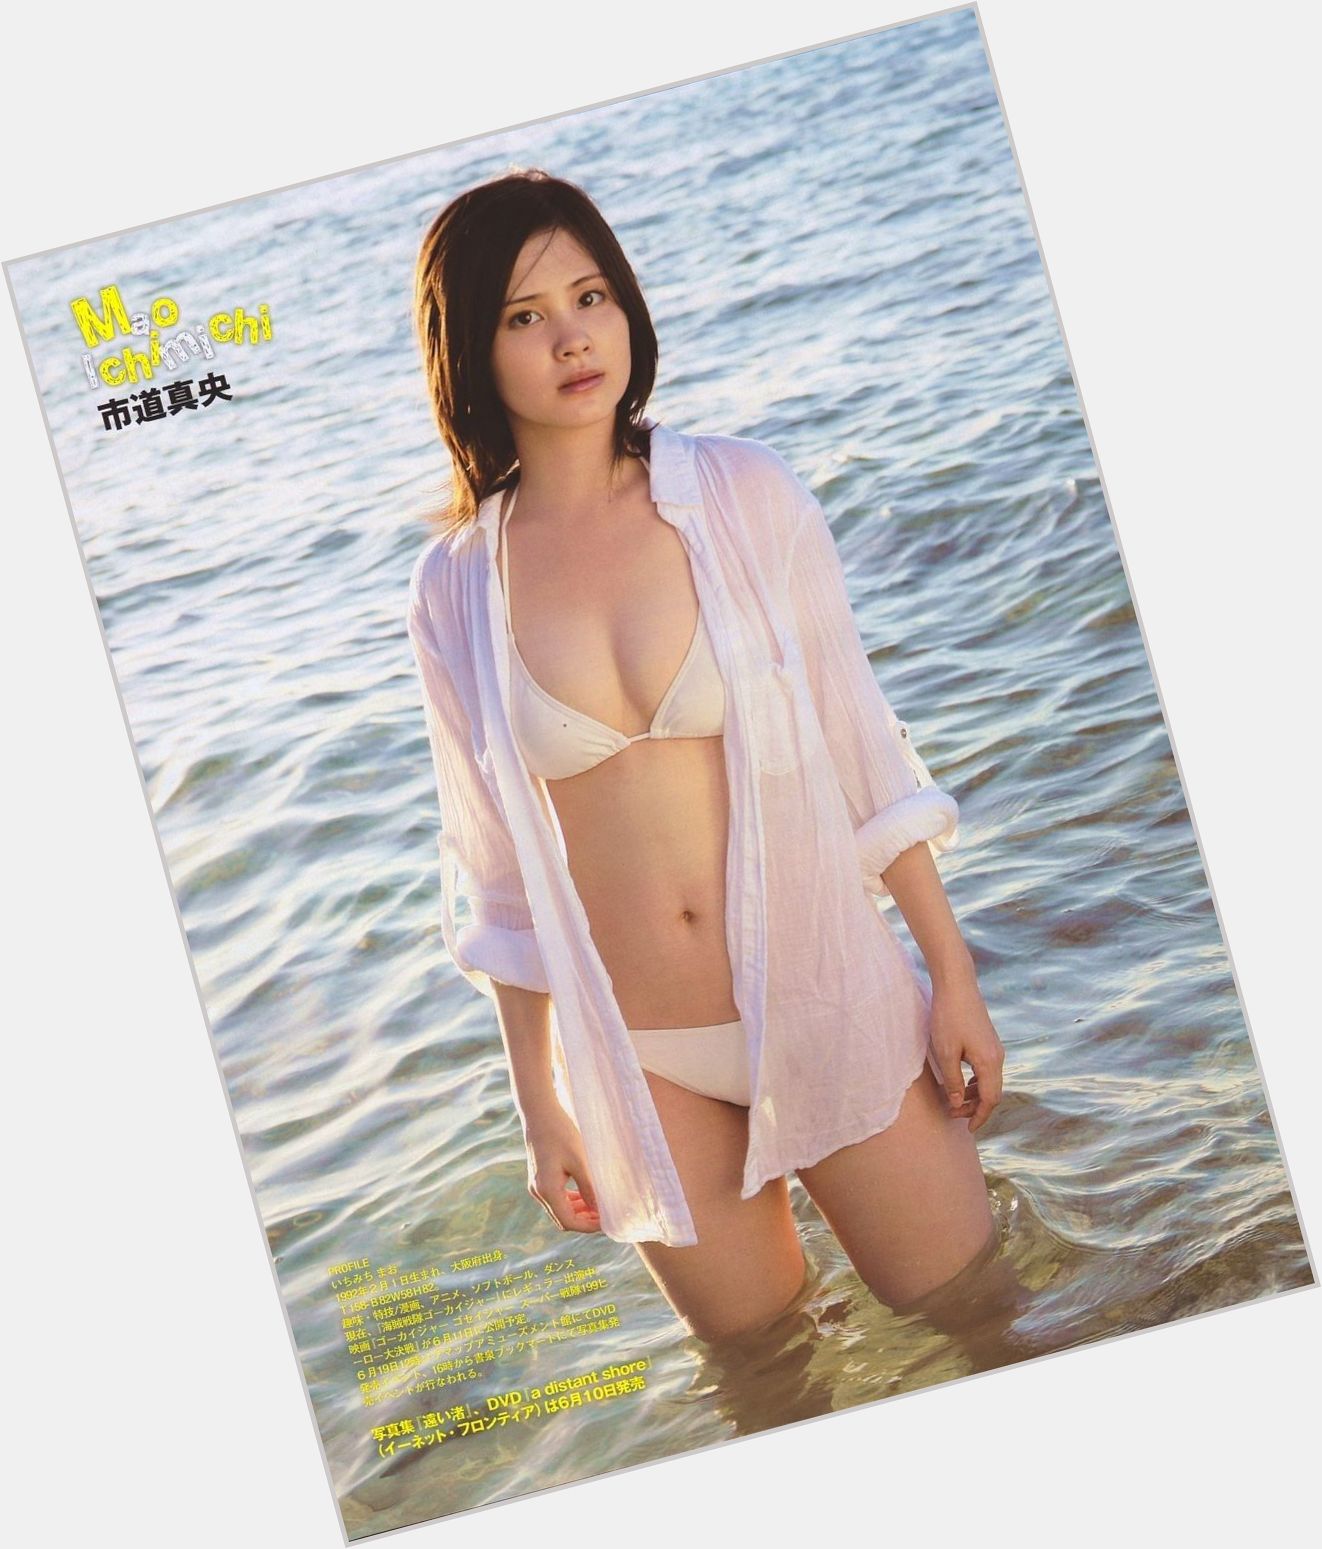 Mao Ichimichi shirtless bikini